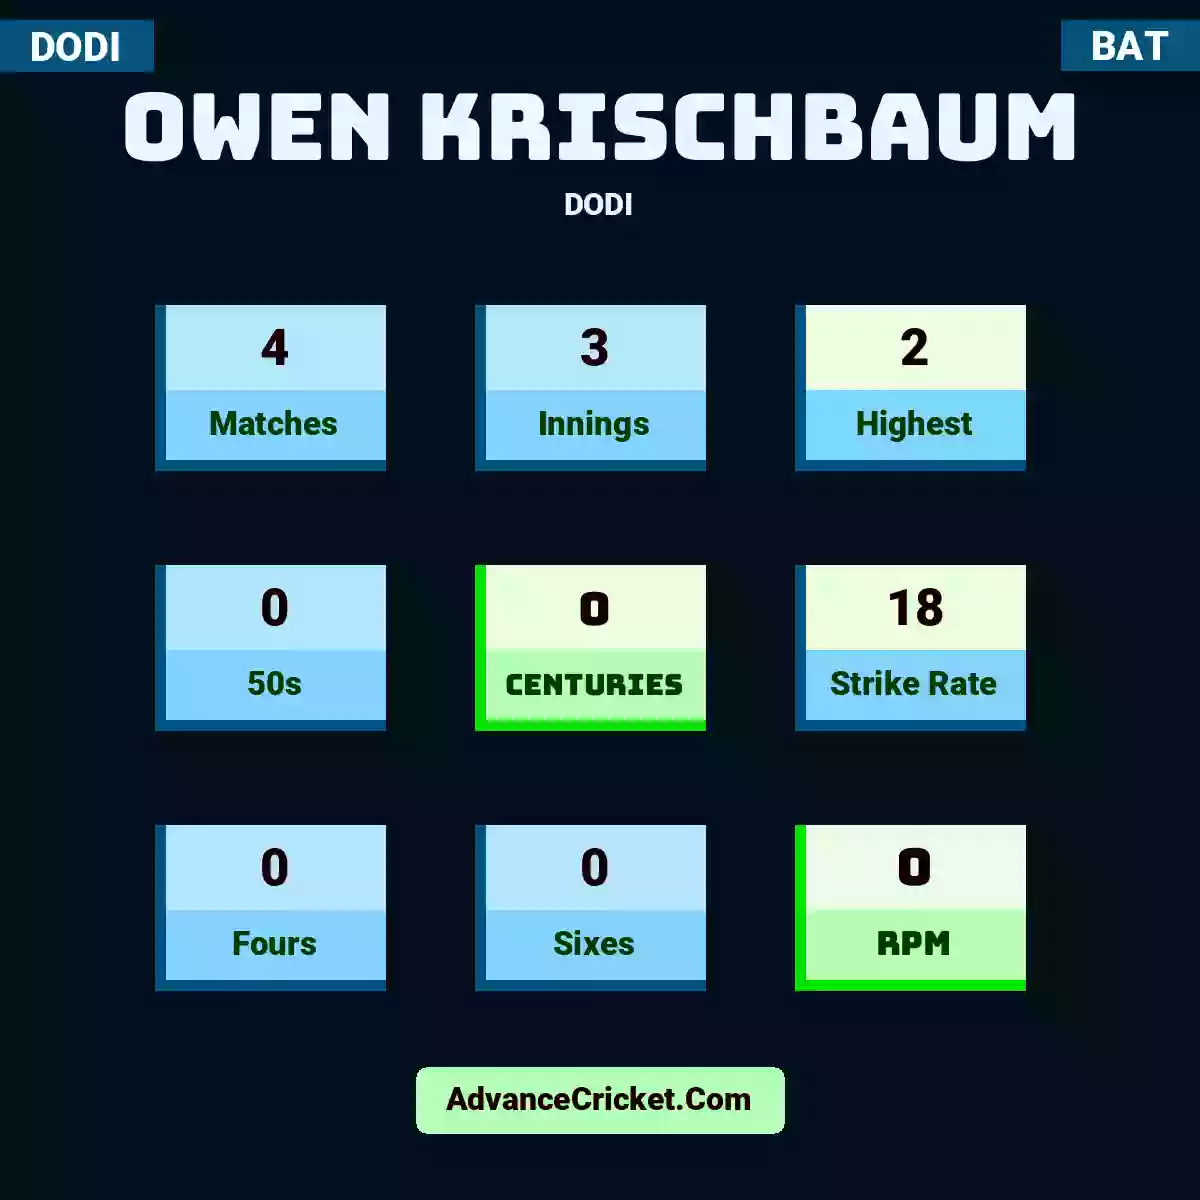 Owen Krischbaum DODI , Owen Krischbaum played 4 matches, scored 2 runs as highest, 0 half-centuries, and 0 centuries, with a strike rate of 18. O.Krischbaum hit 0 fours and 0 sixes, with an RPM of 0.